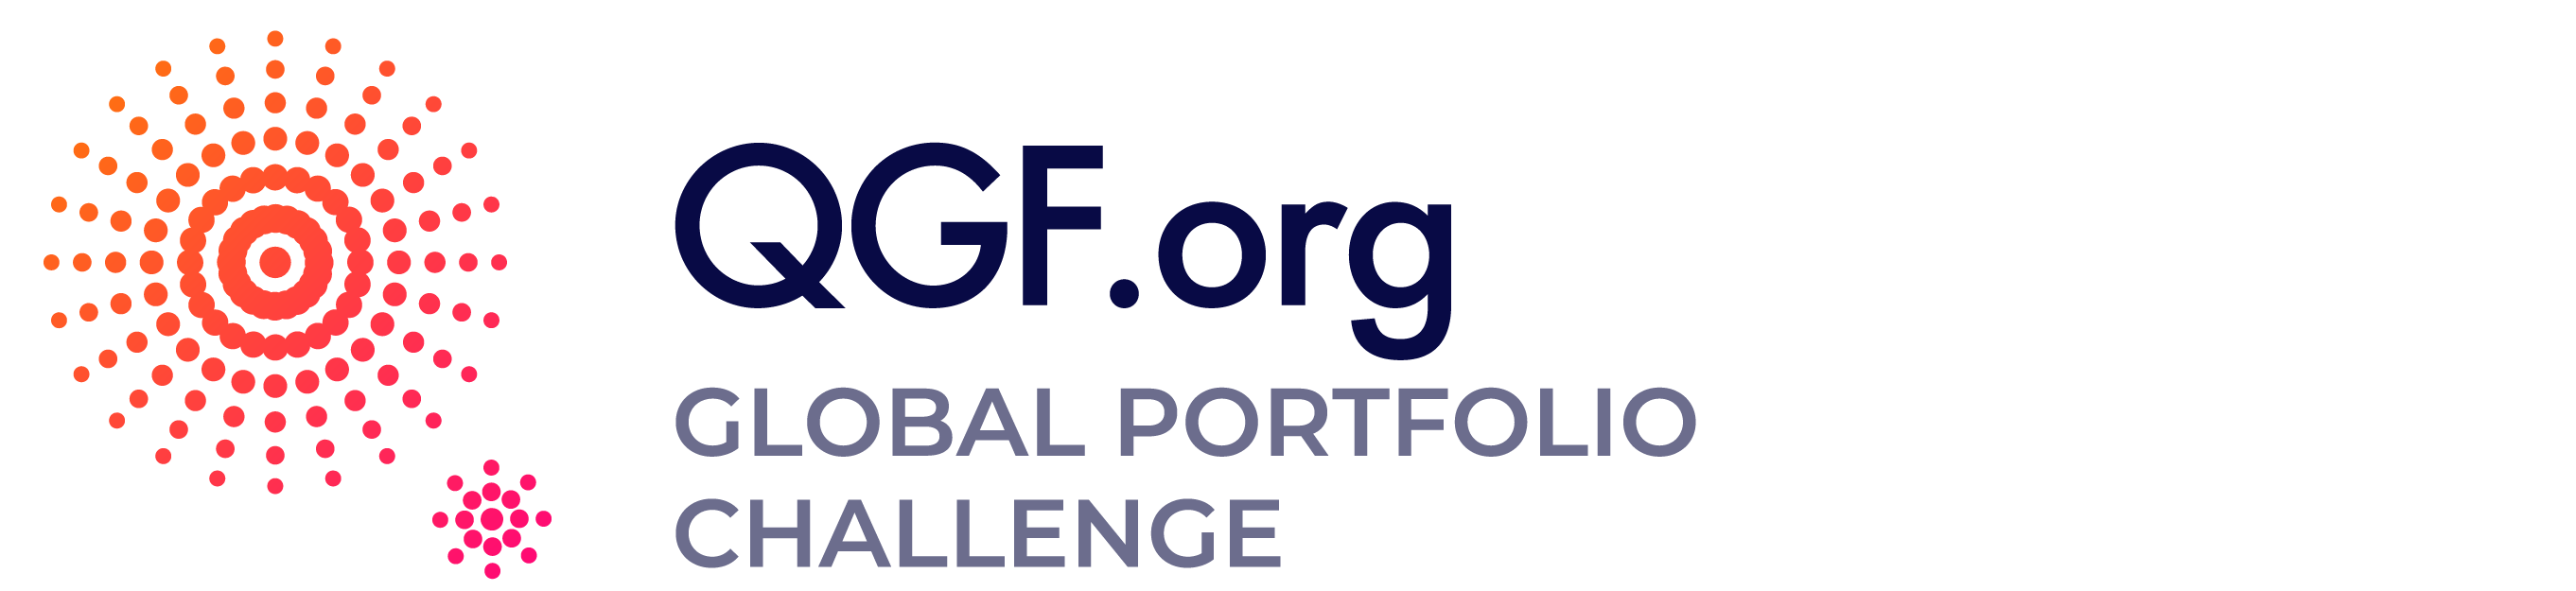 ETF Global Portfolio Challenge Logo